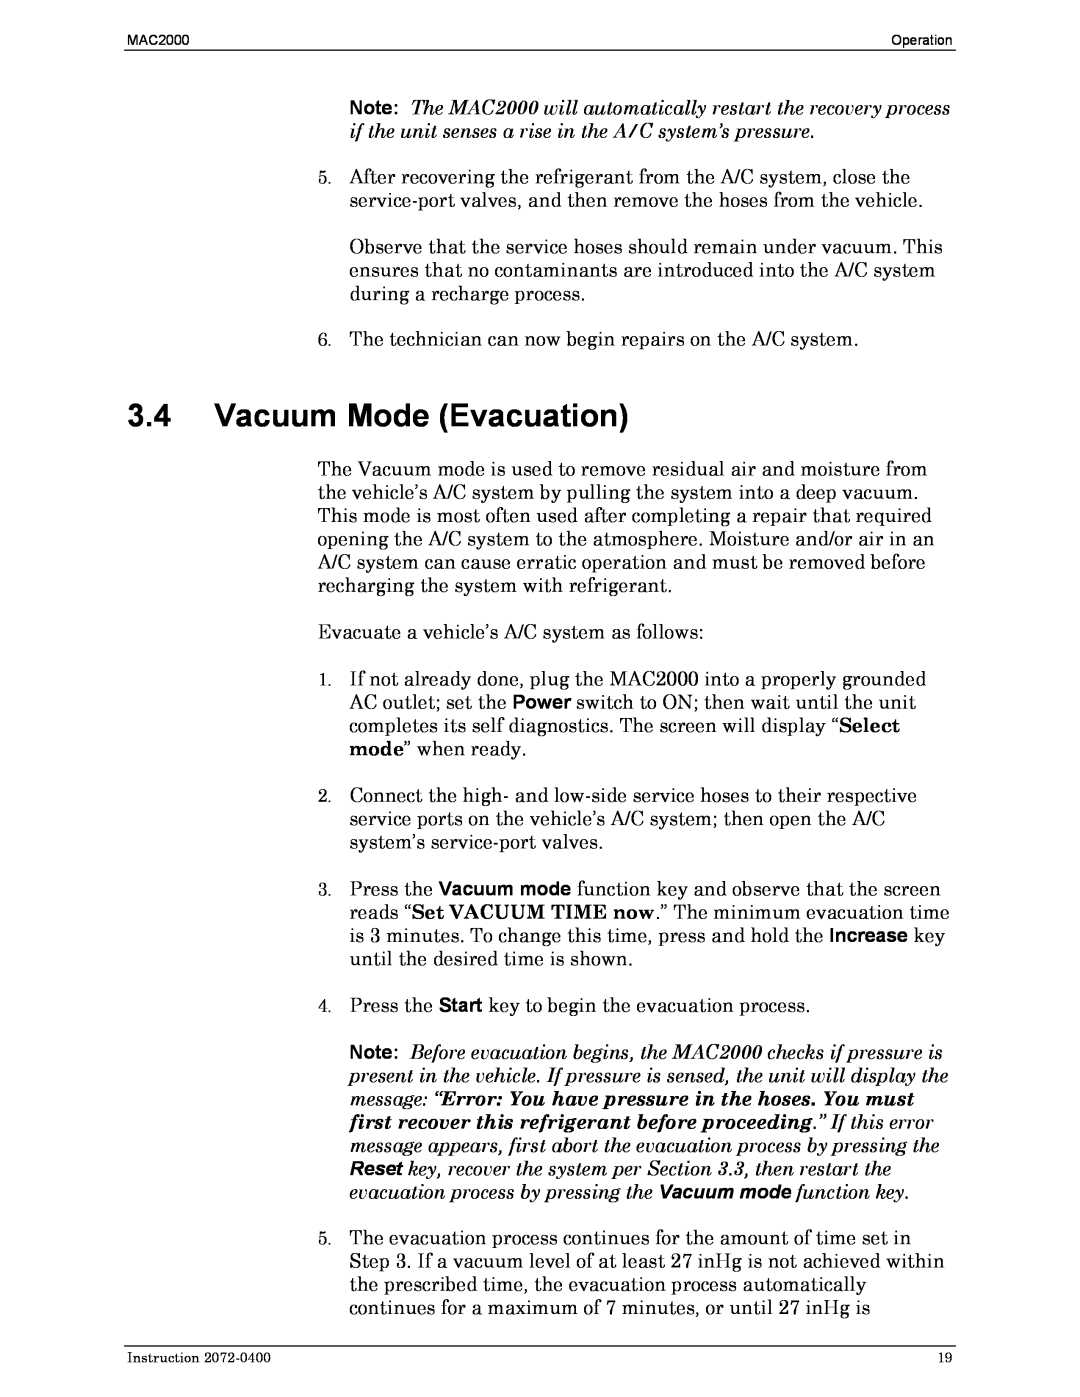 Bacharach 2072-0400 manual 3.4Vacuum Mode Evacuation 